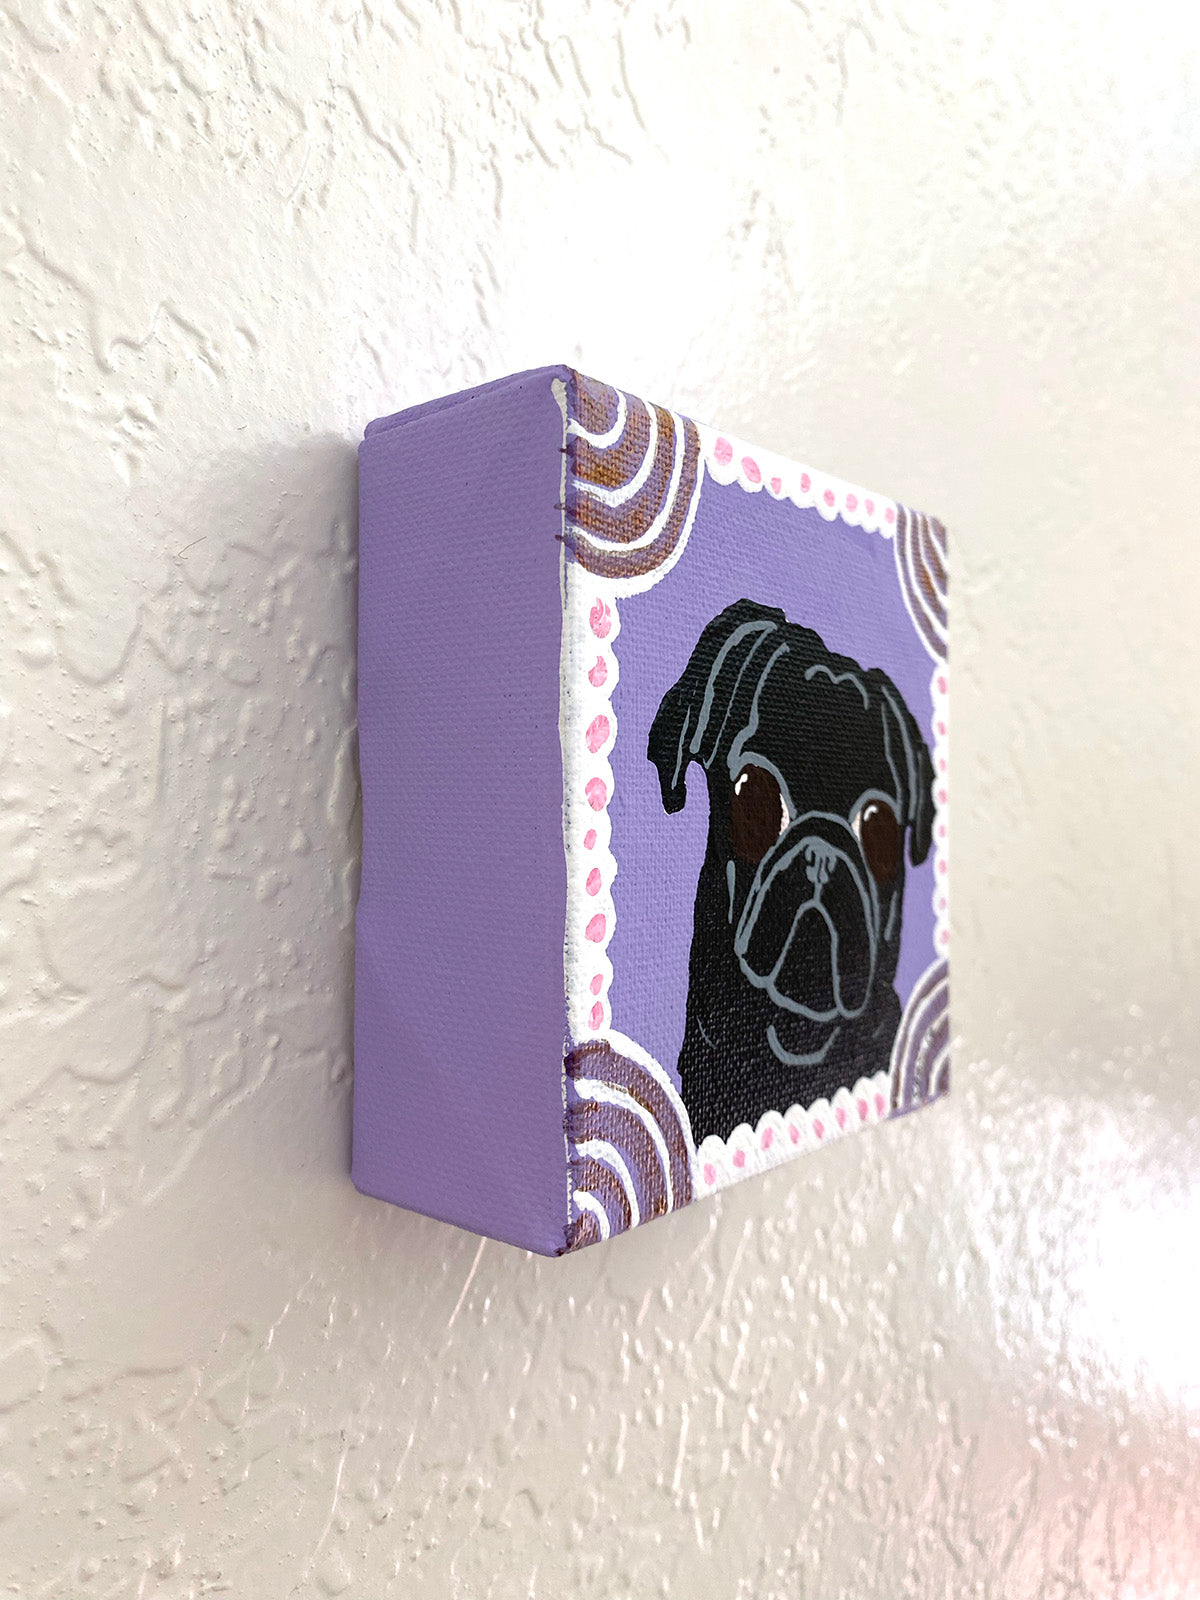 Purple Square - Art Treats #99